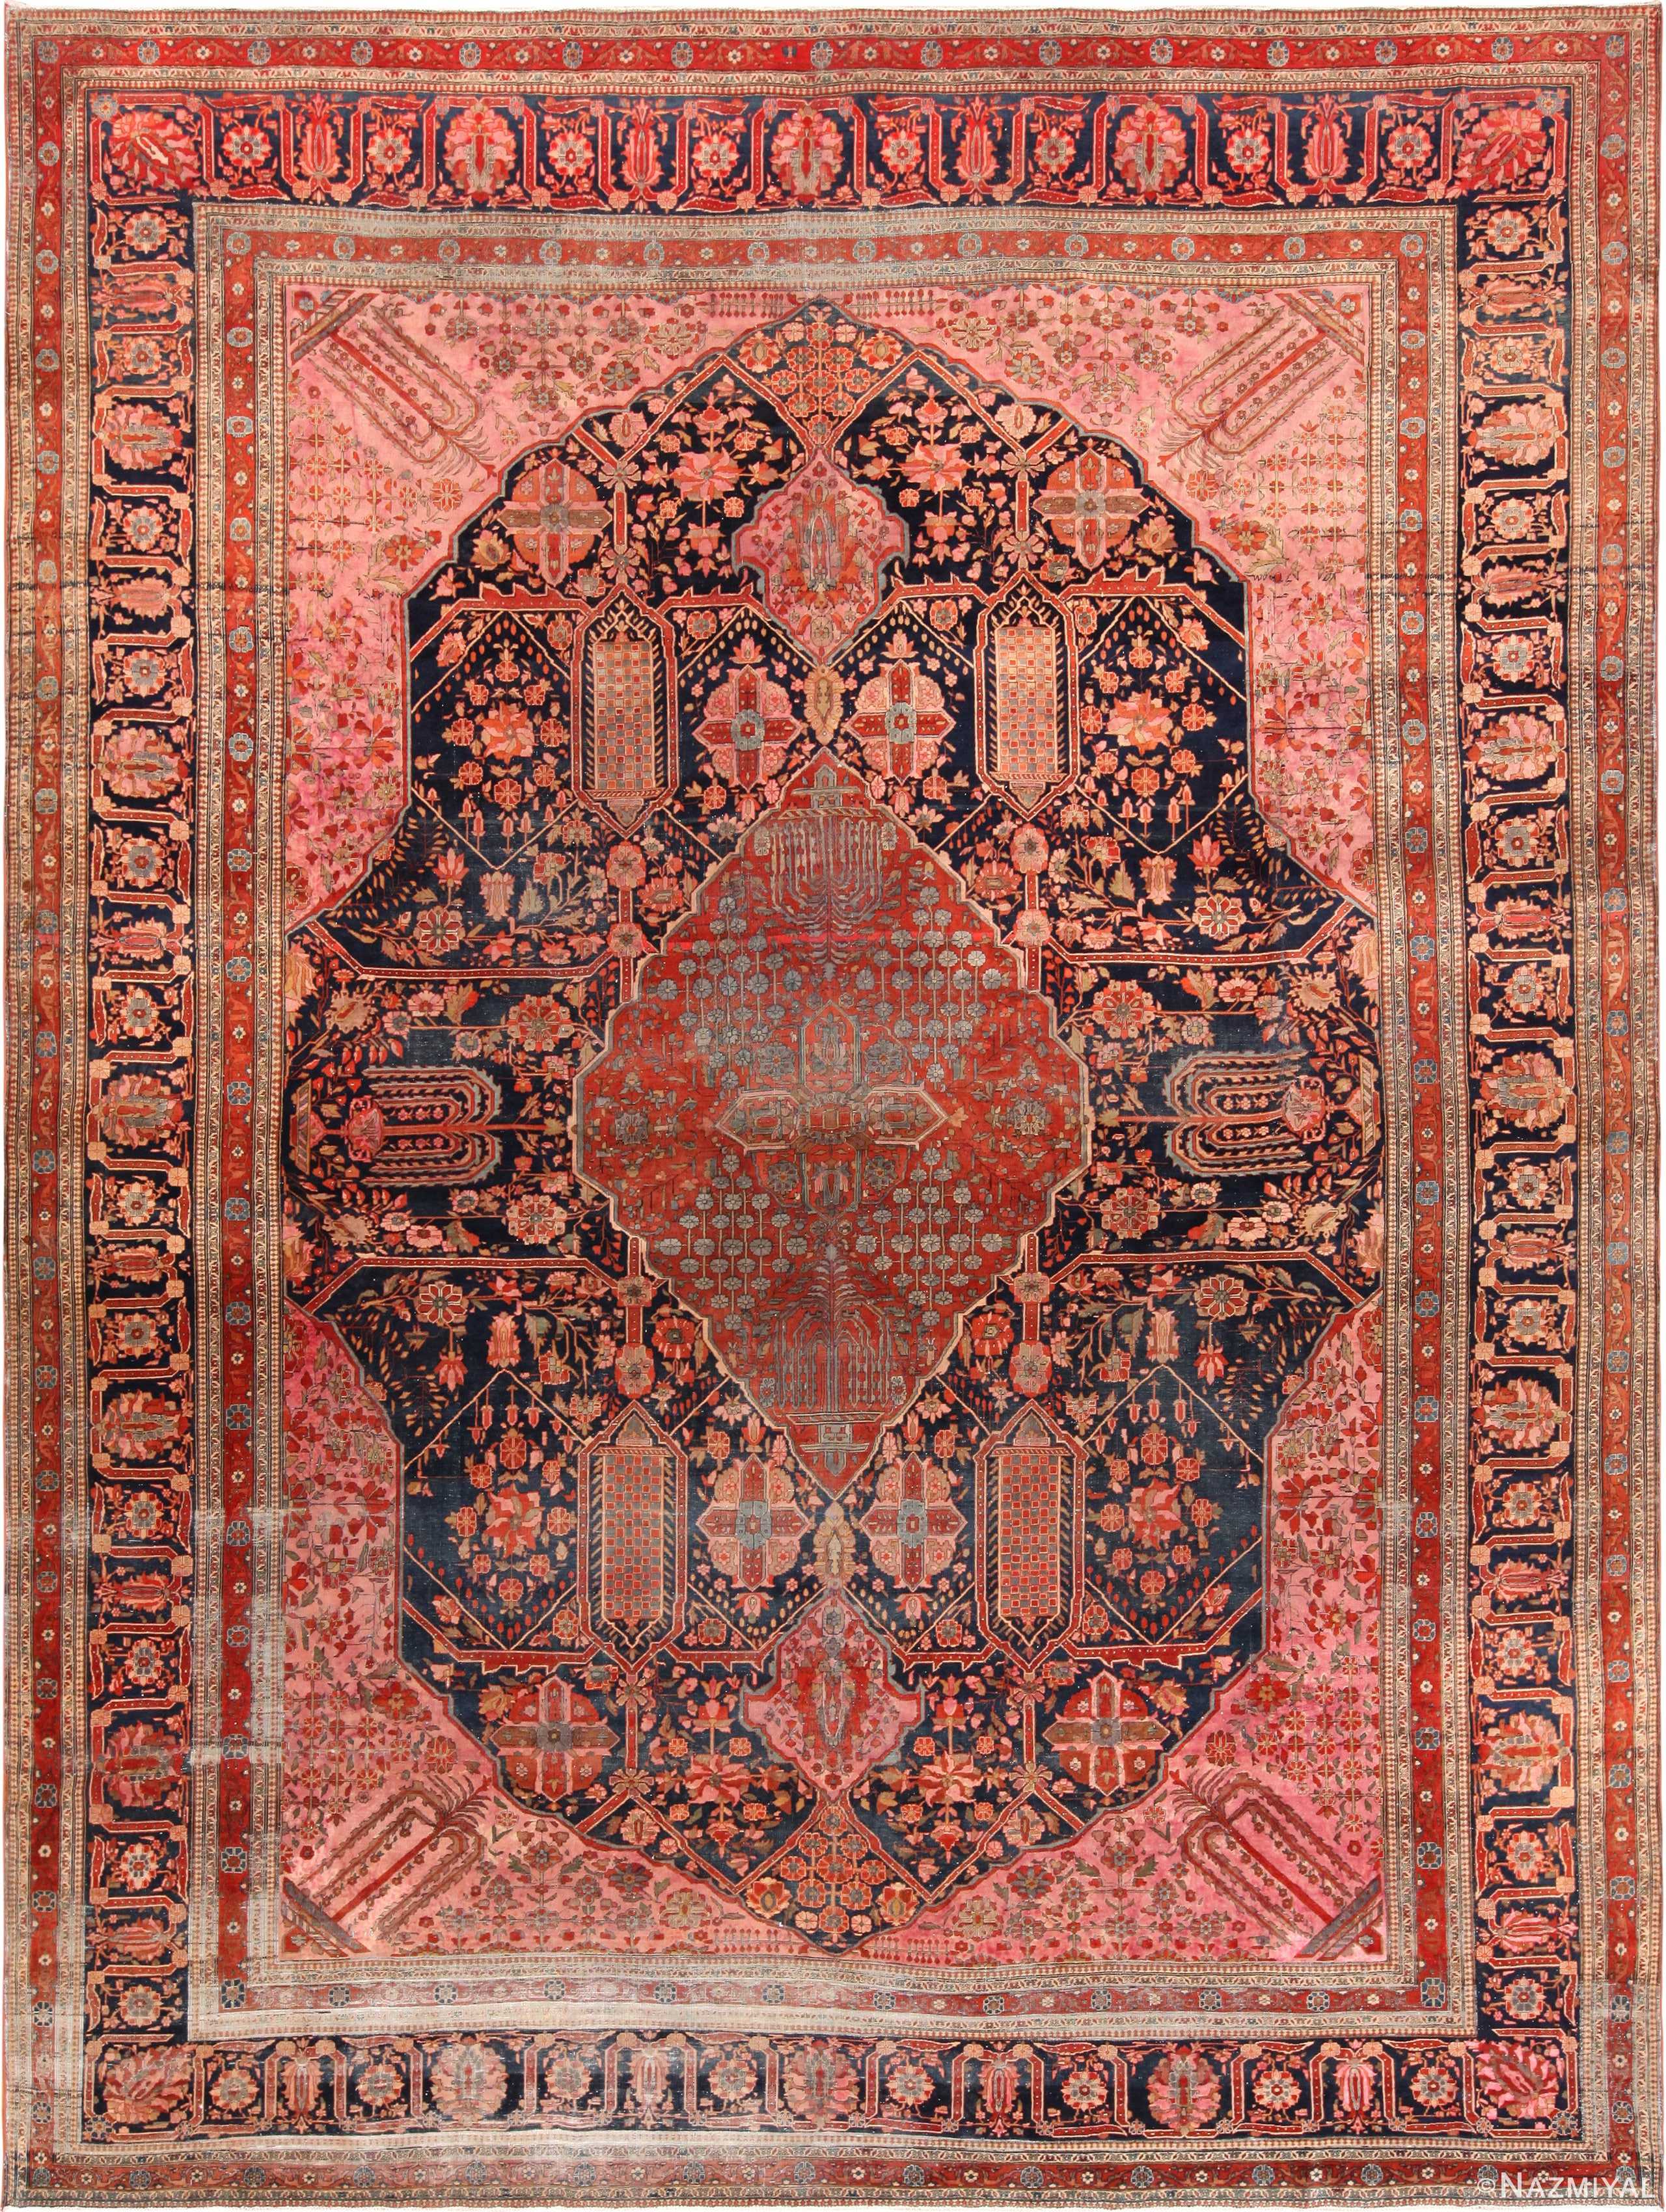 Antique Persian Mohtasham Kashan Rug 71111 by Nazmiyal Antique Rugs